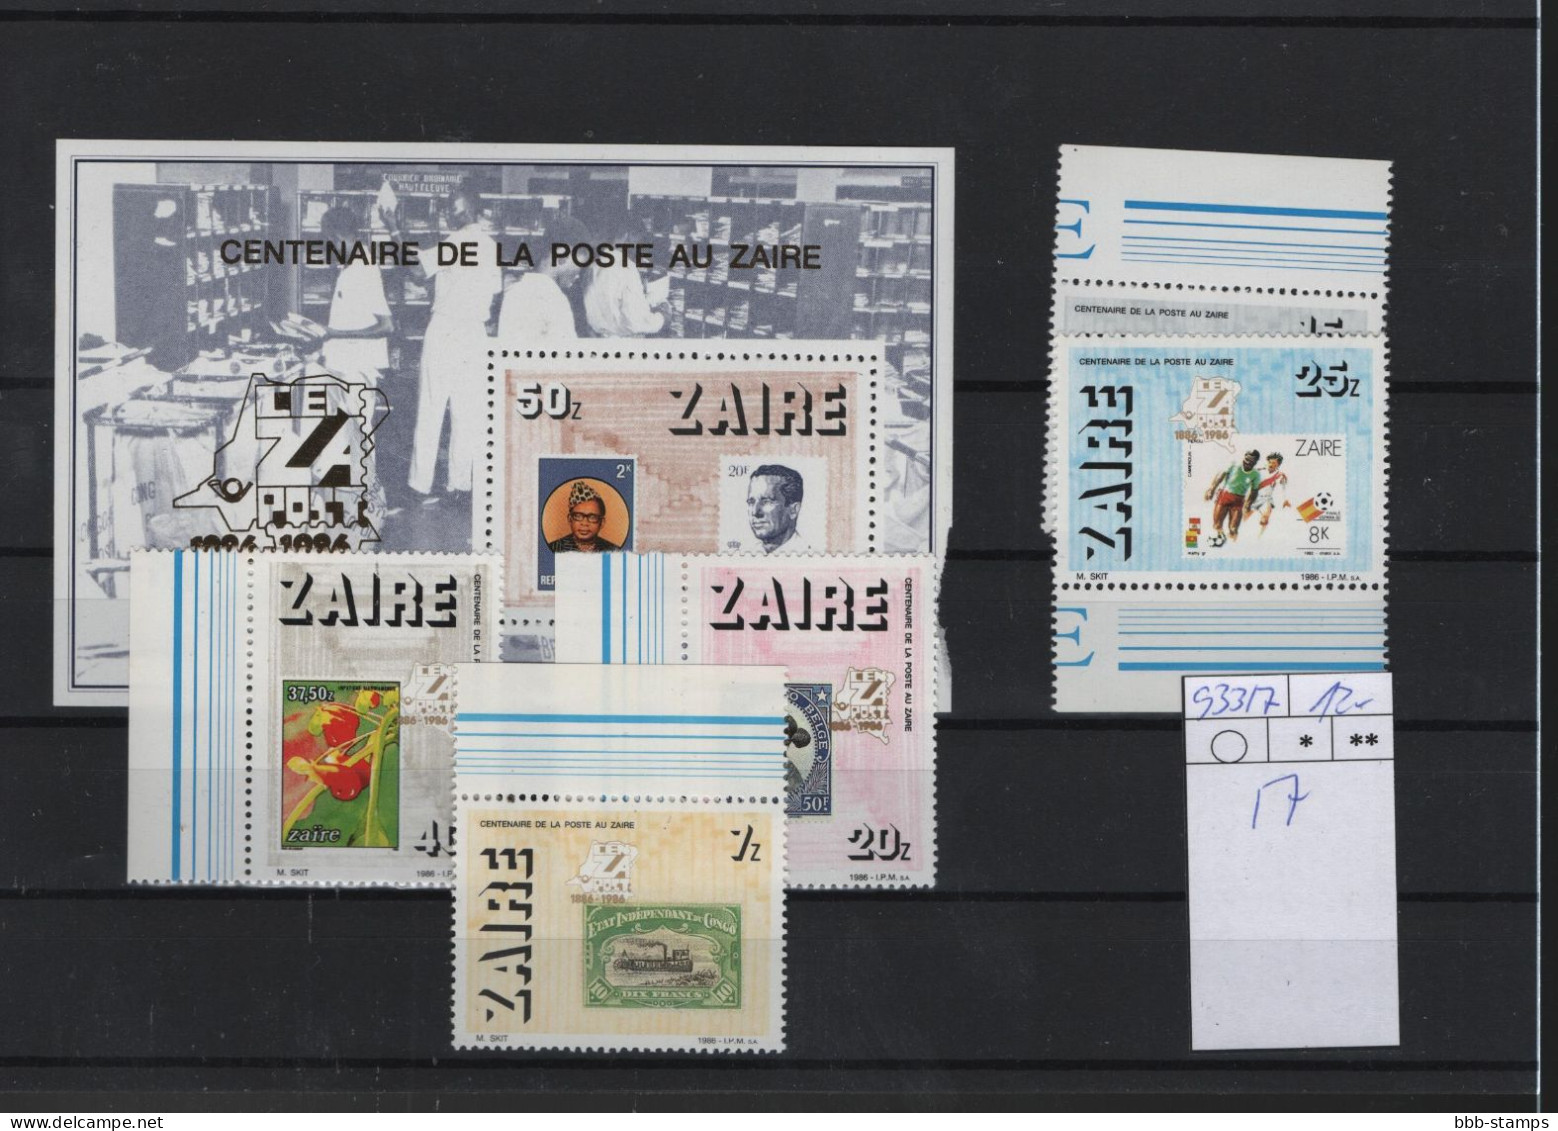 Kongo Kinshasa Michel Cat.No. Mnh/** 933/937 + Sheet 57 - Unused Stamps